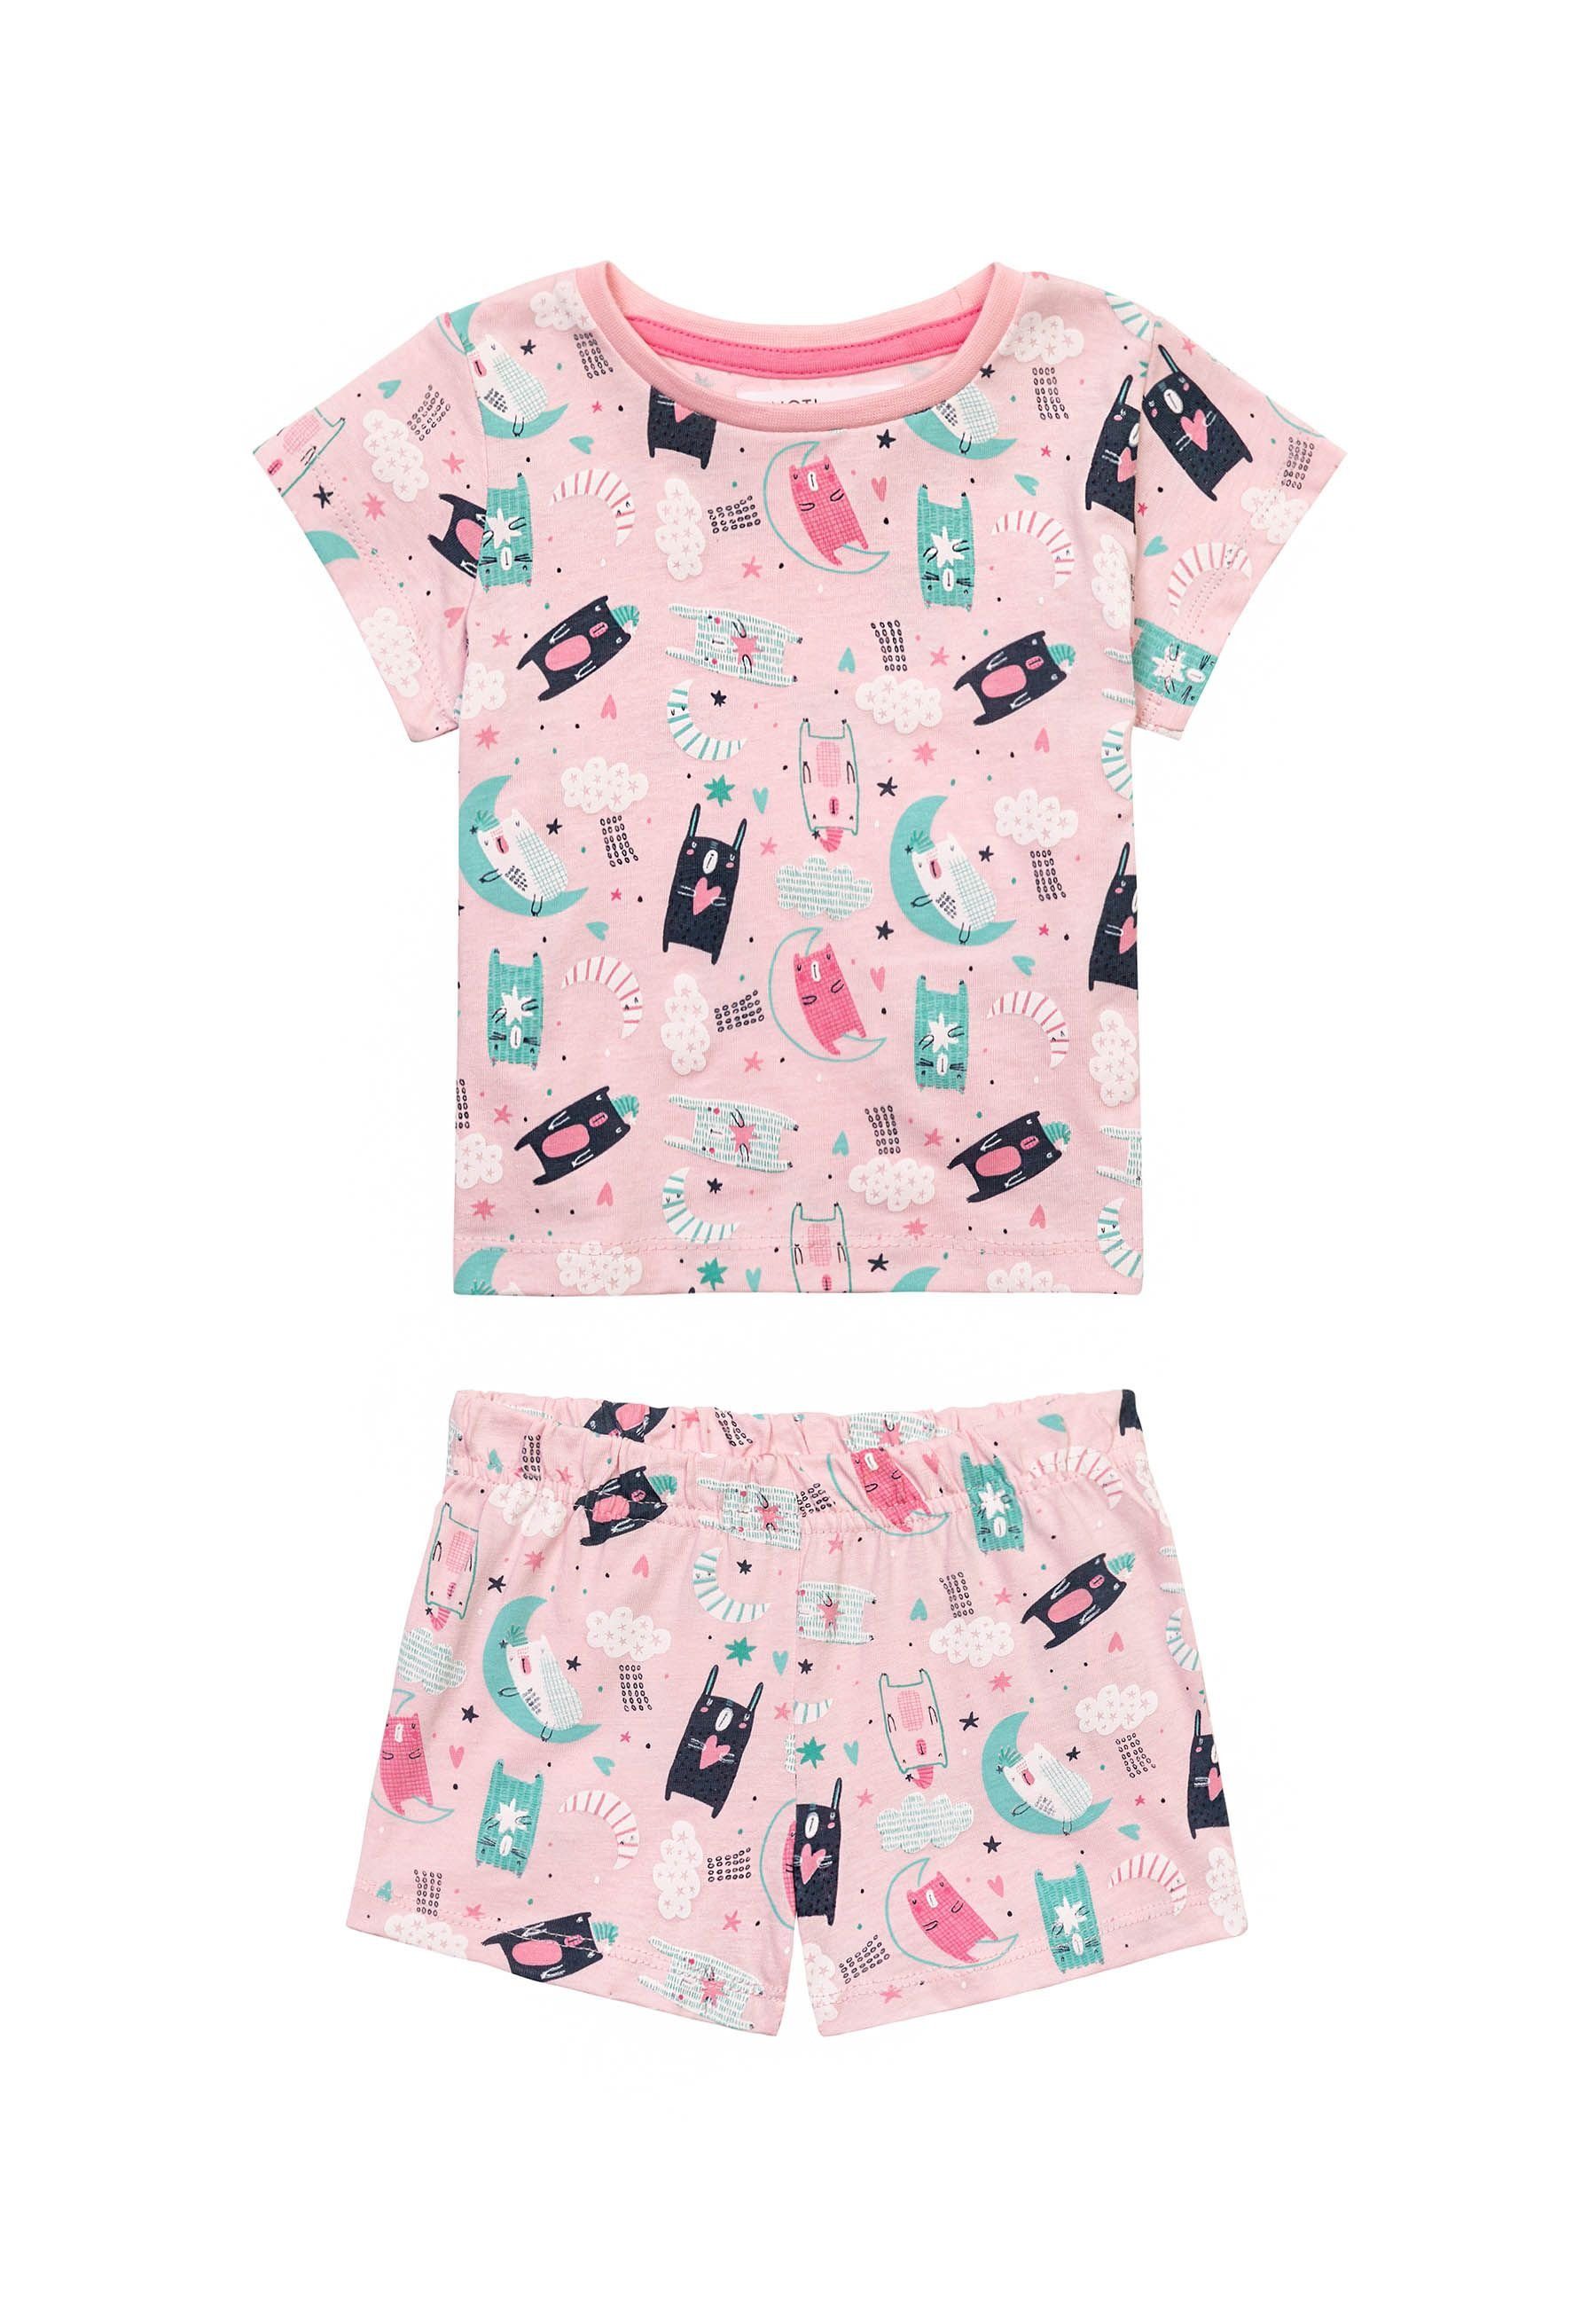 Schlafanzug MINOTI Rosa Pyjama (1y-8y) Sommer